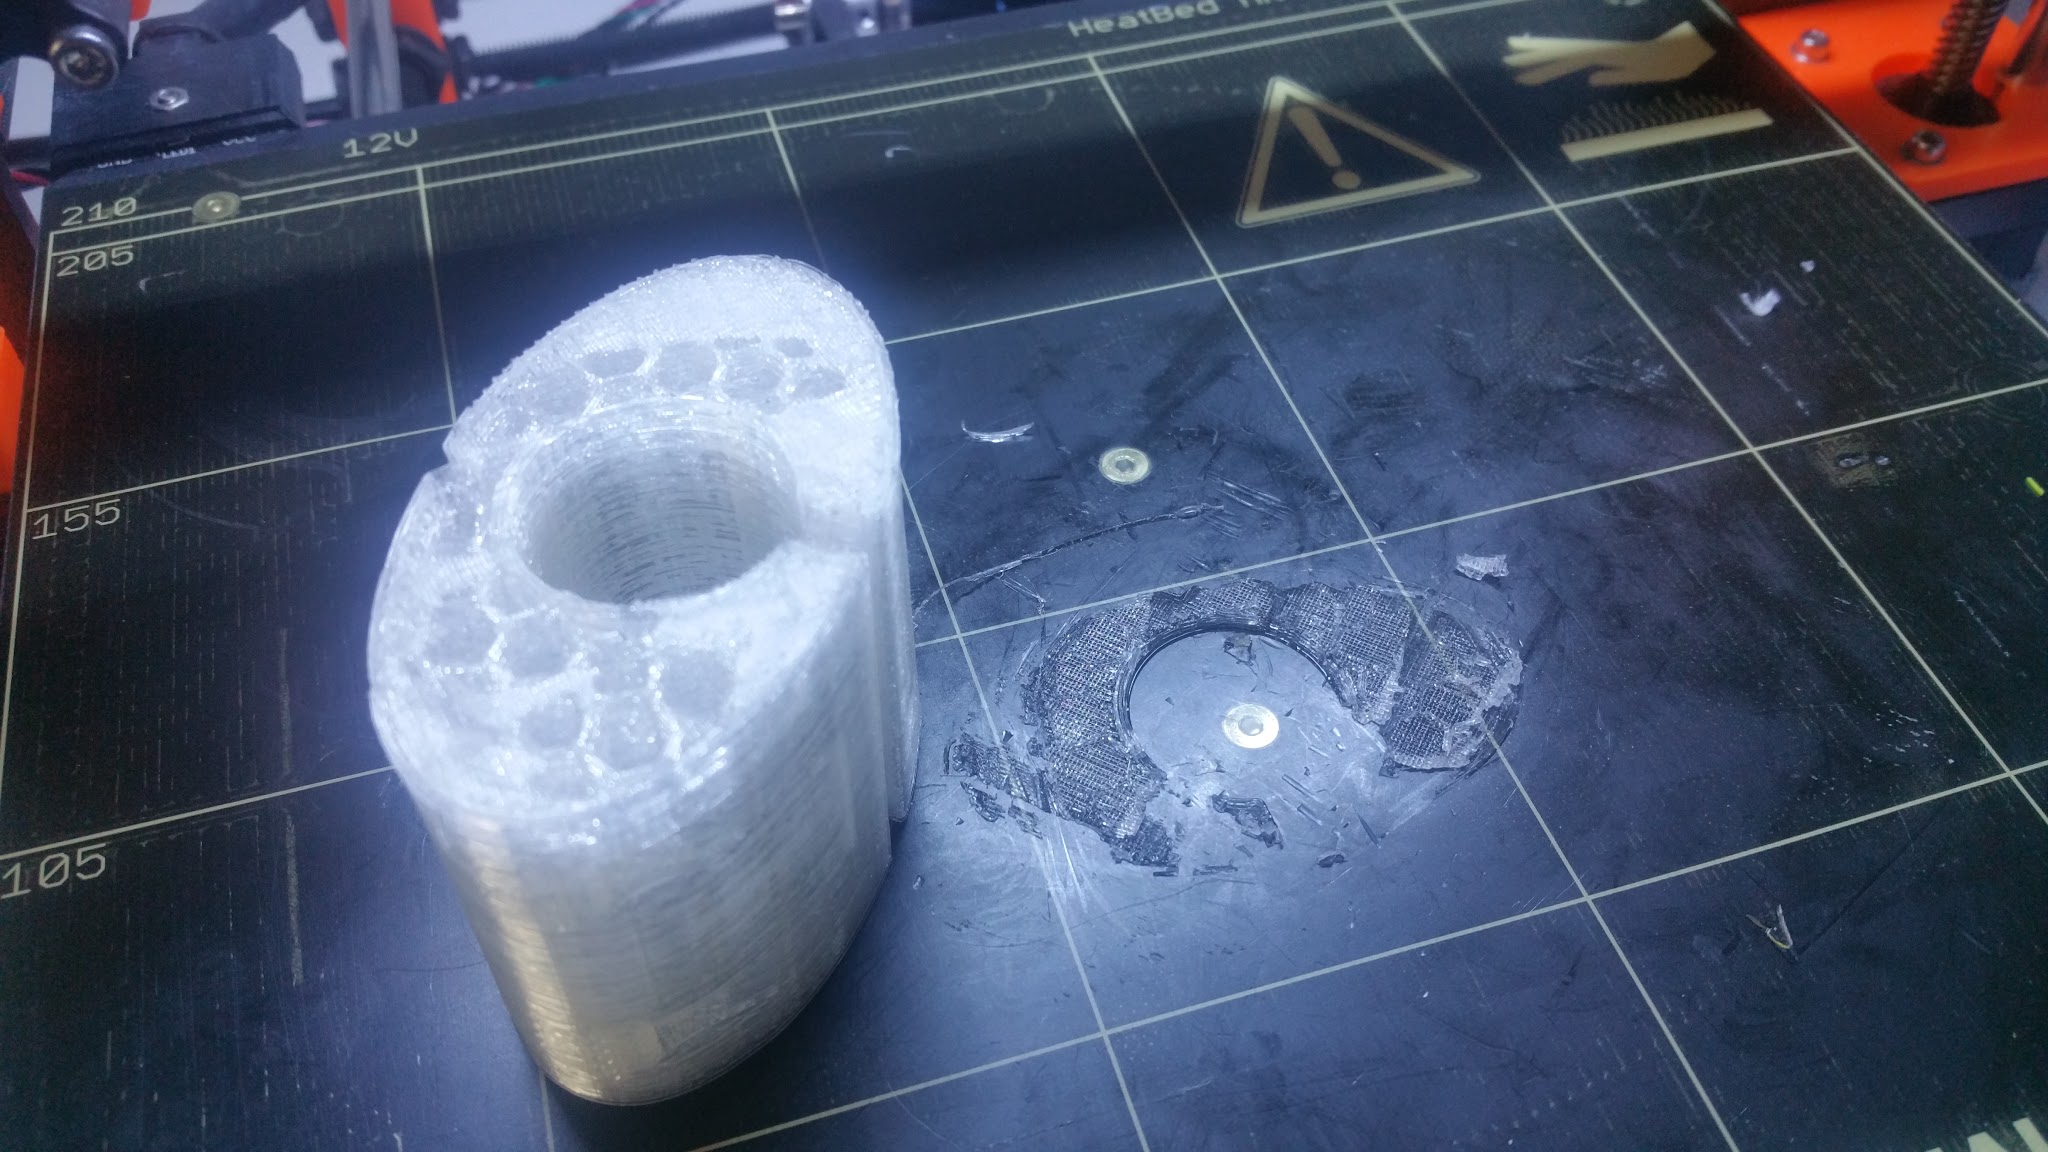 SainSmart TPU 3D Printing Filament, Perfect for Drones Racing